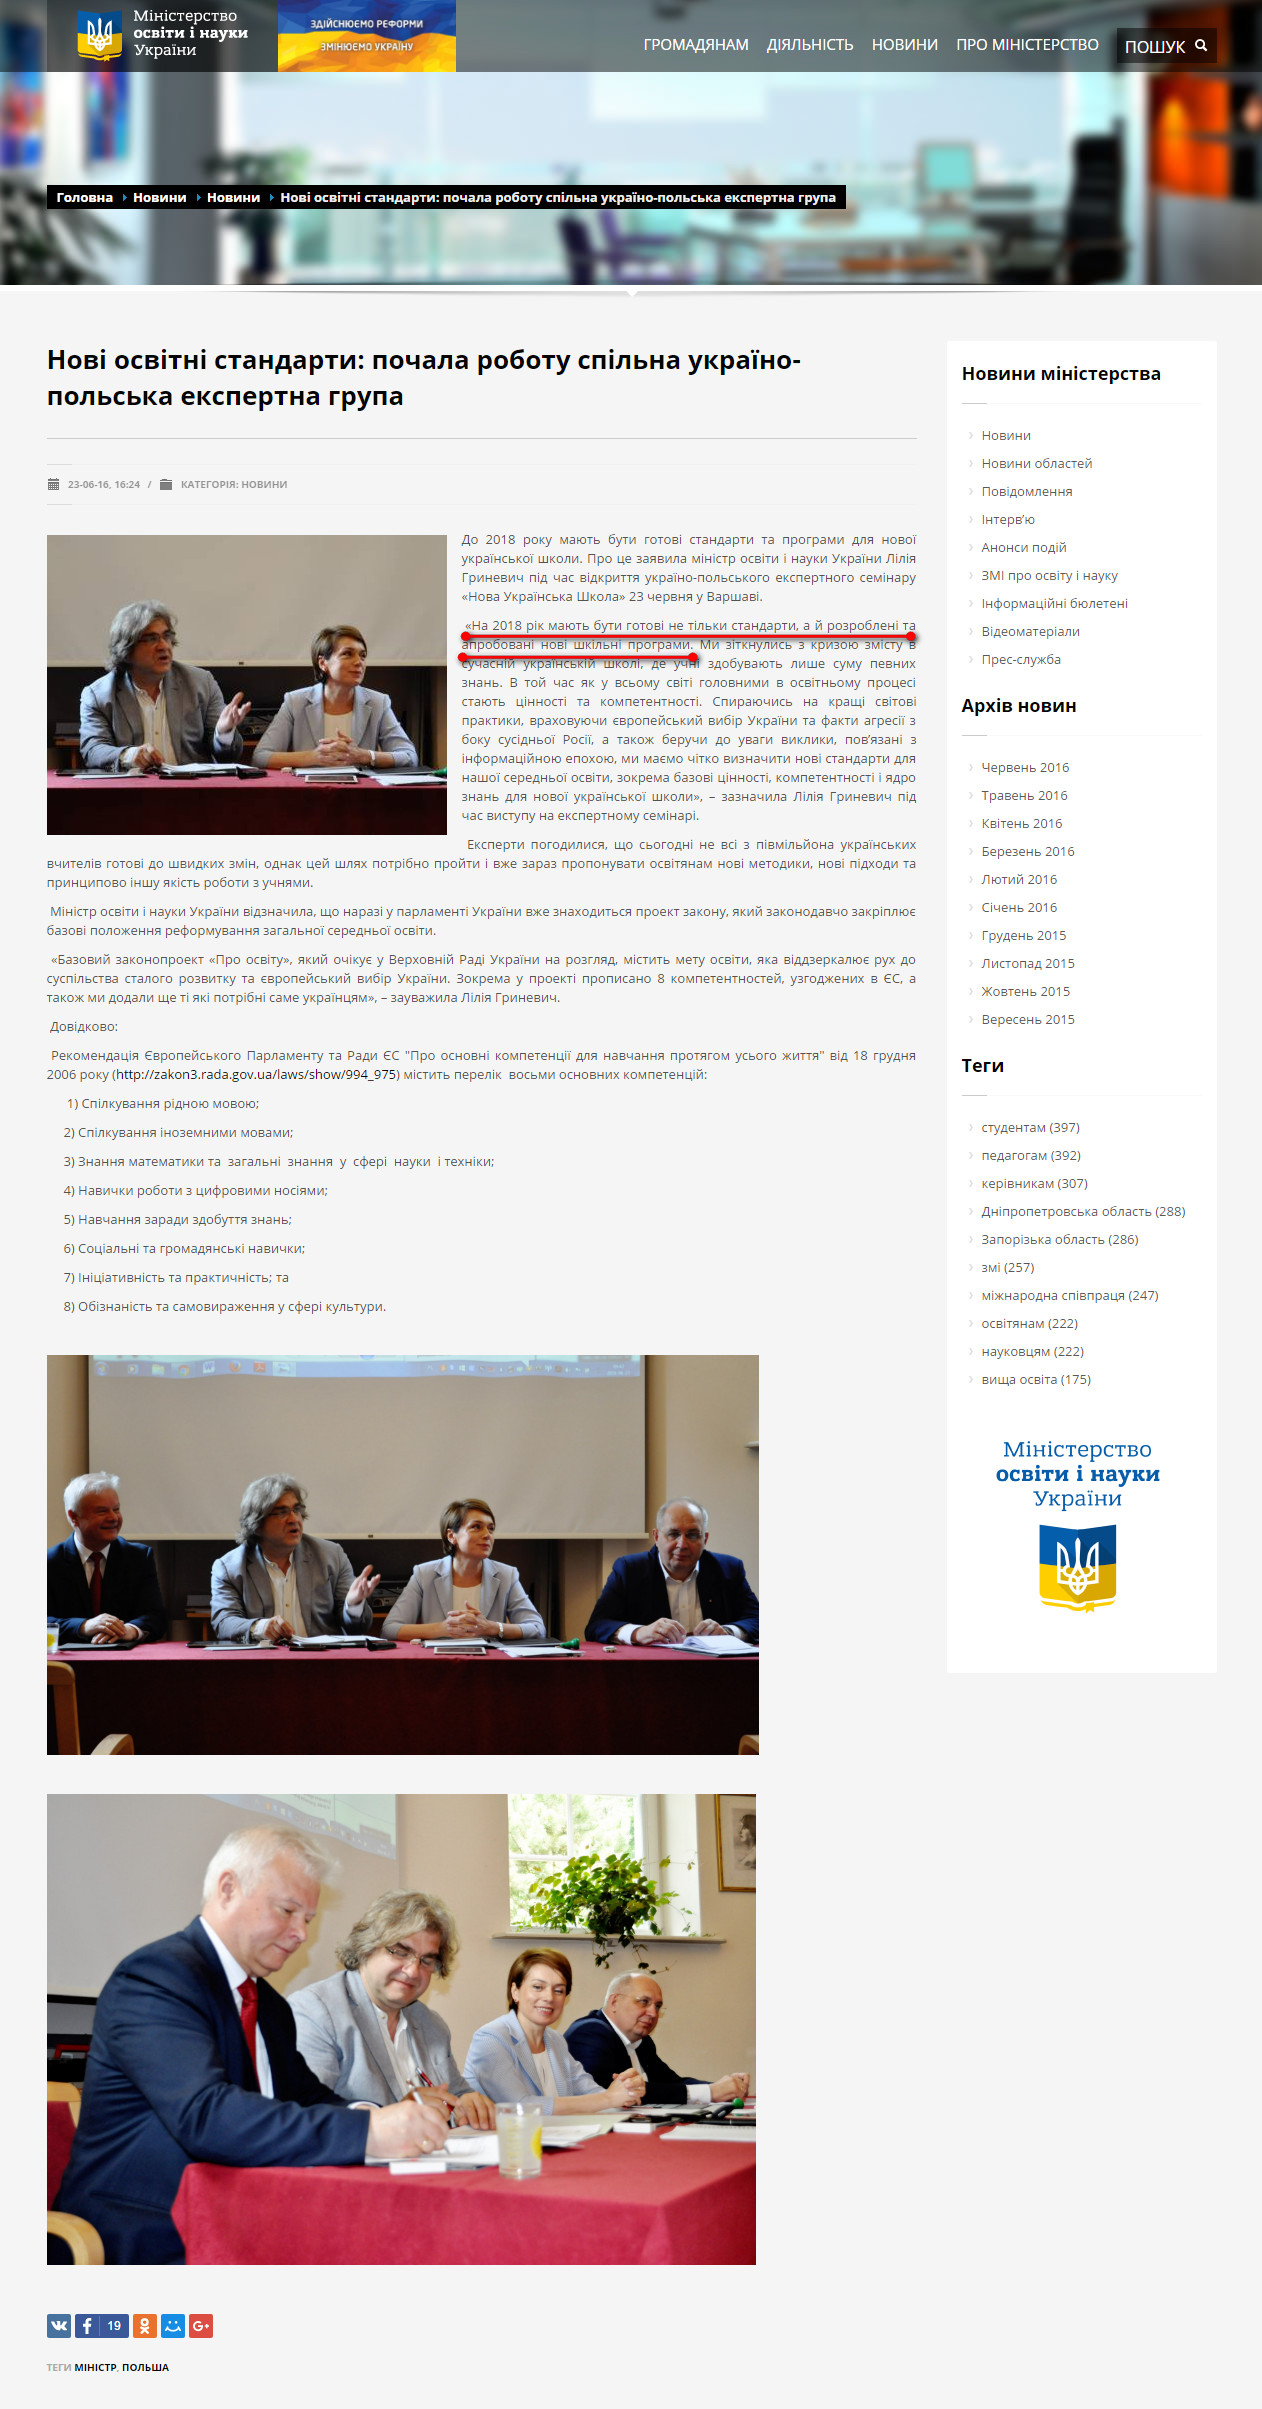 http://mon.gov.ua/usi-novivni/novini/2016/06/23/novi-osvitni-standarti-pochala-robotu-spilna-ukrayino-polska-ekspertna-grupa/